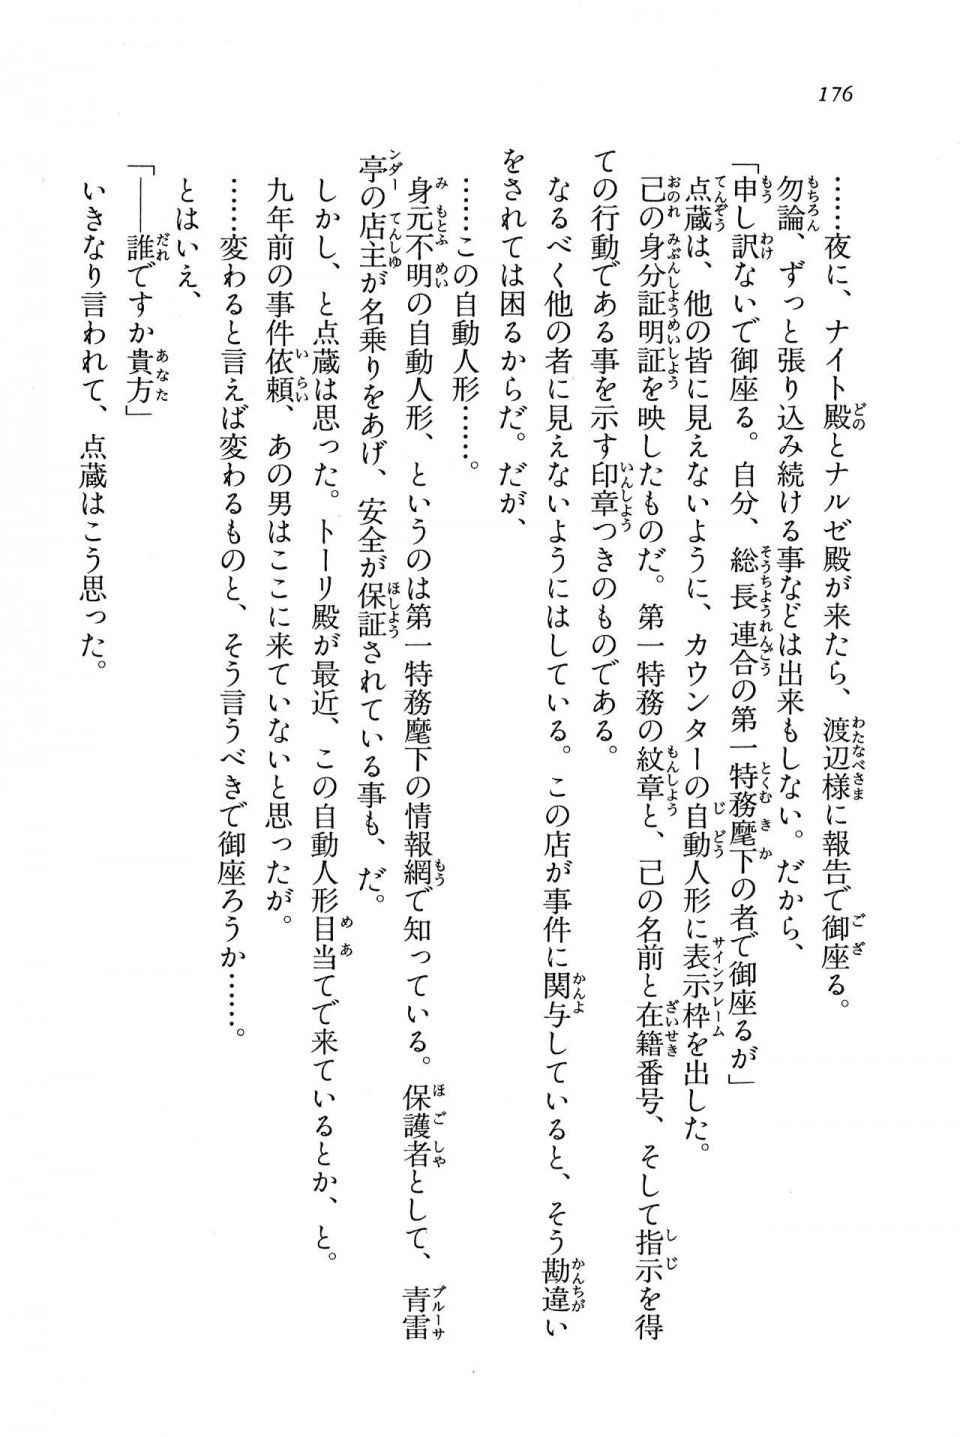 Kyoukai Senjou no Horizon BD Special Mininovel Vol 7(4A) - Photo #180